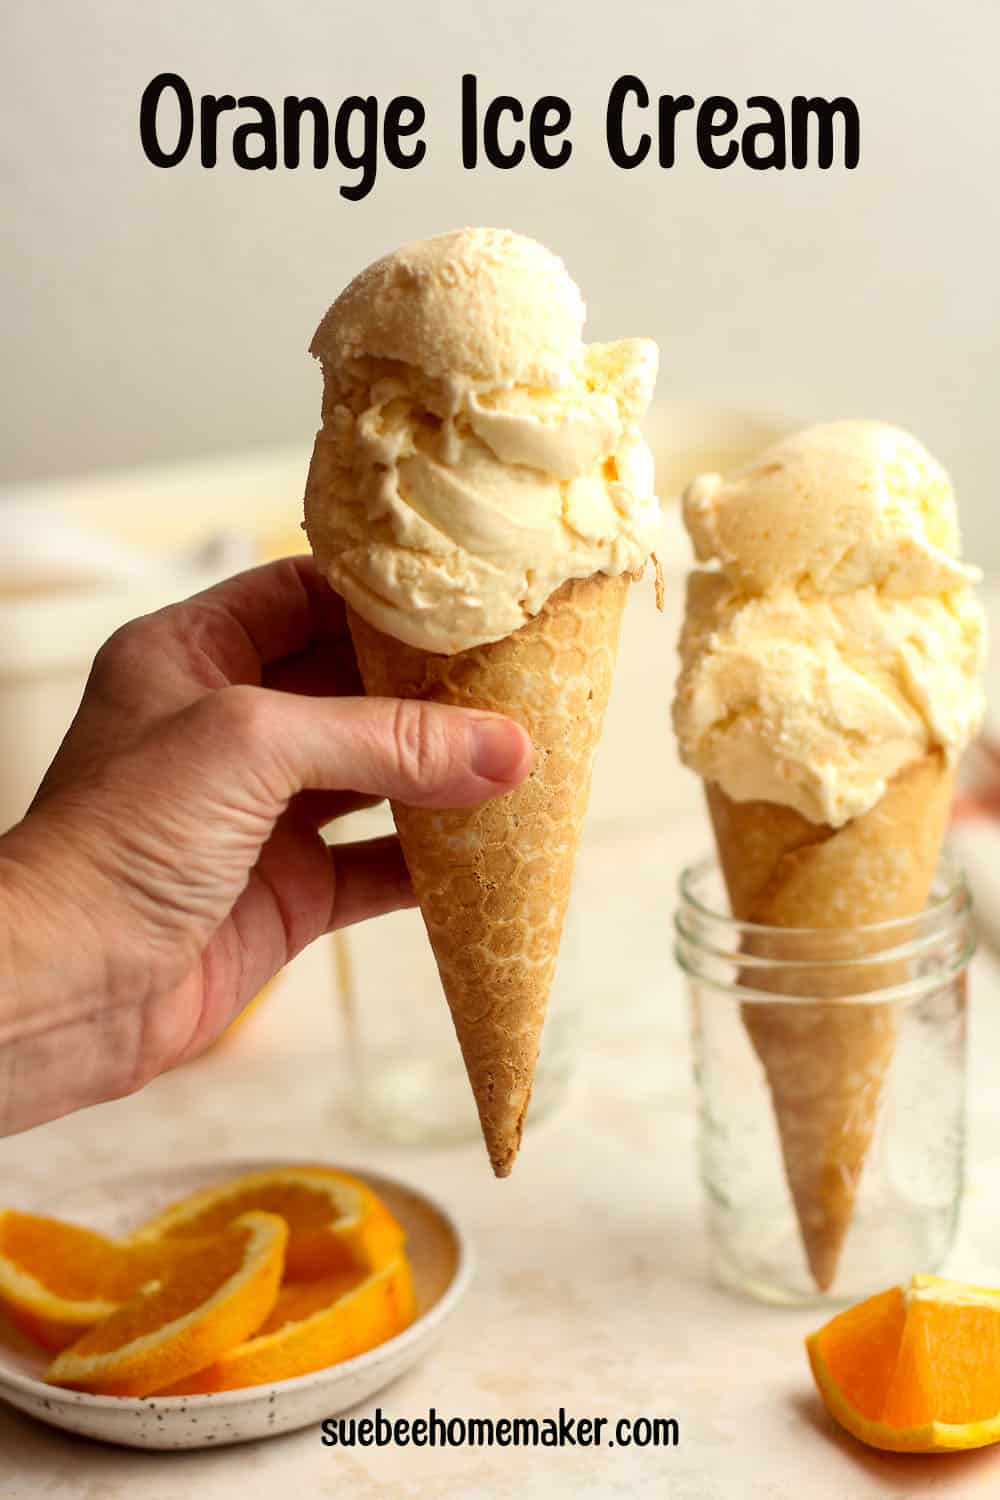 Two cones of orange ice cream, a hand holding one.